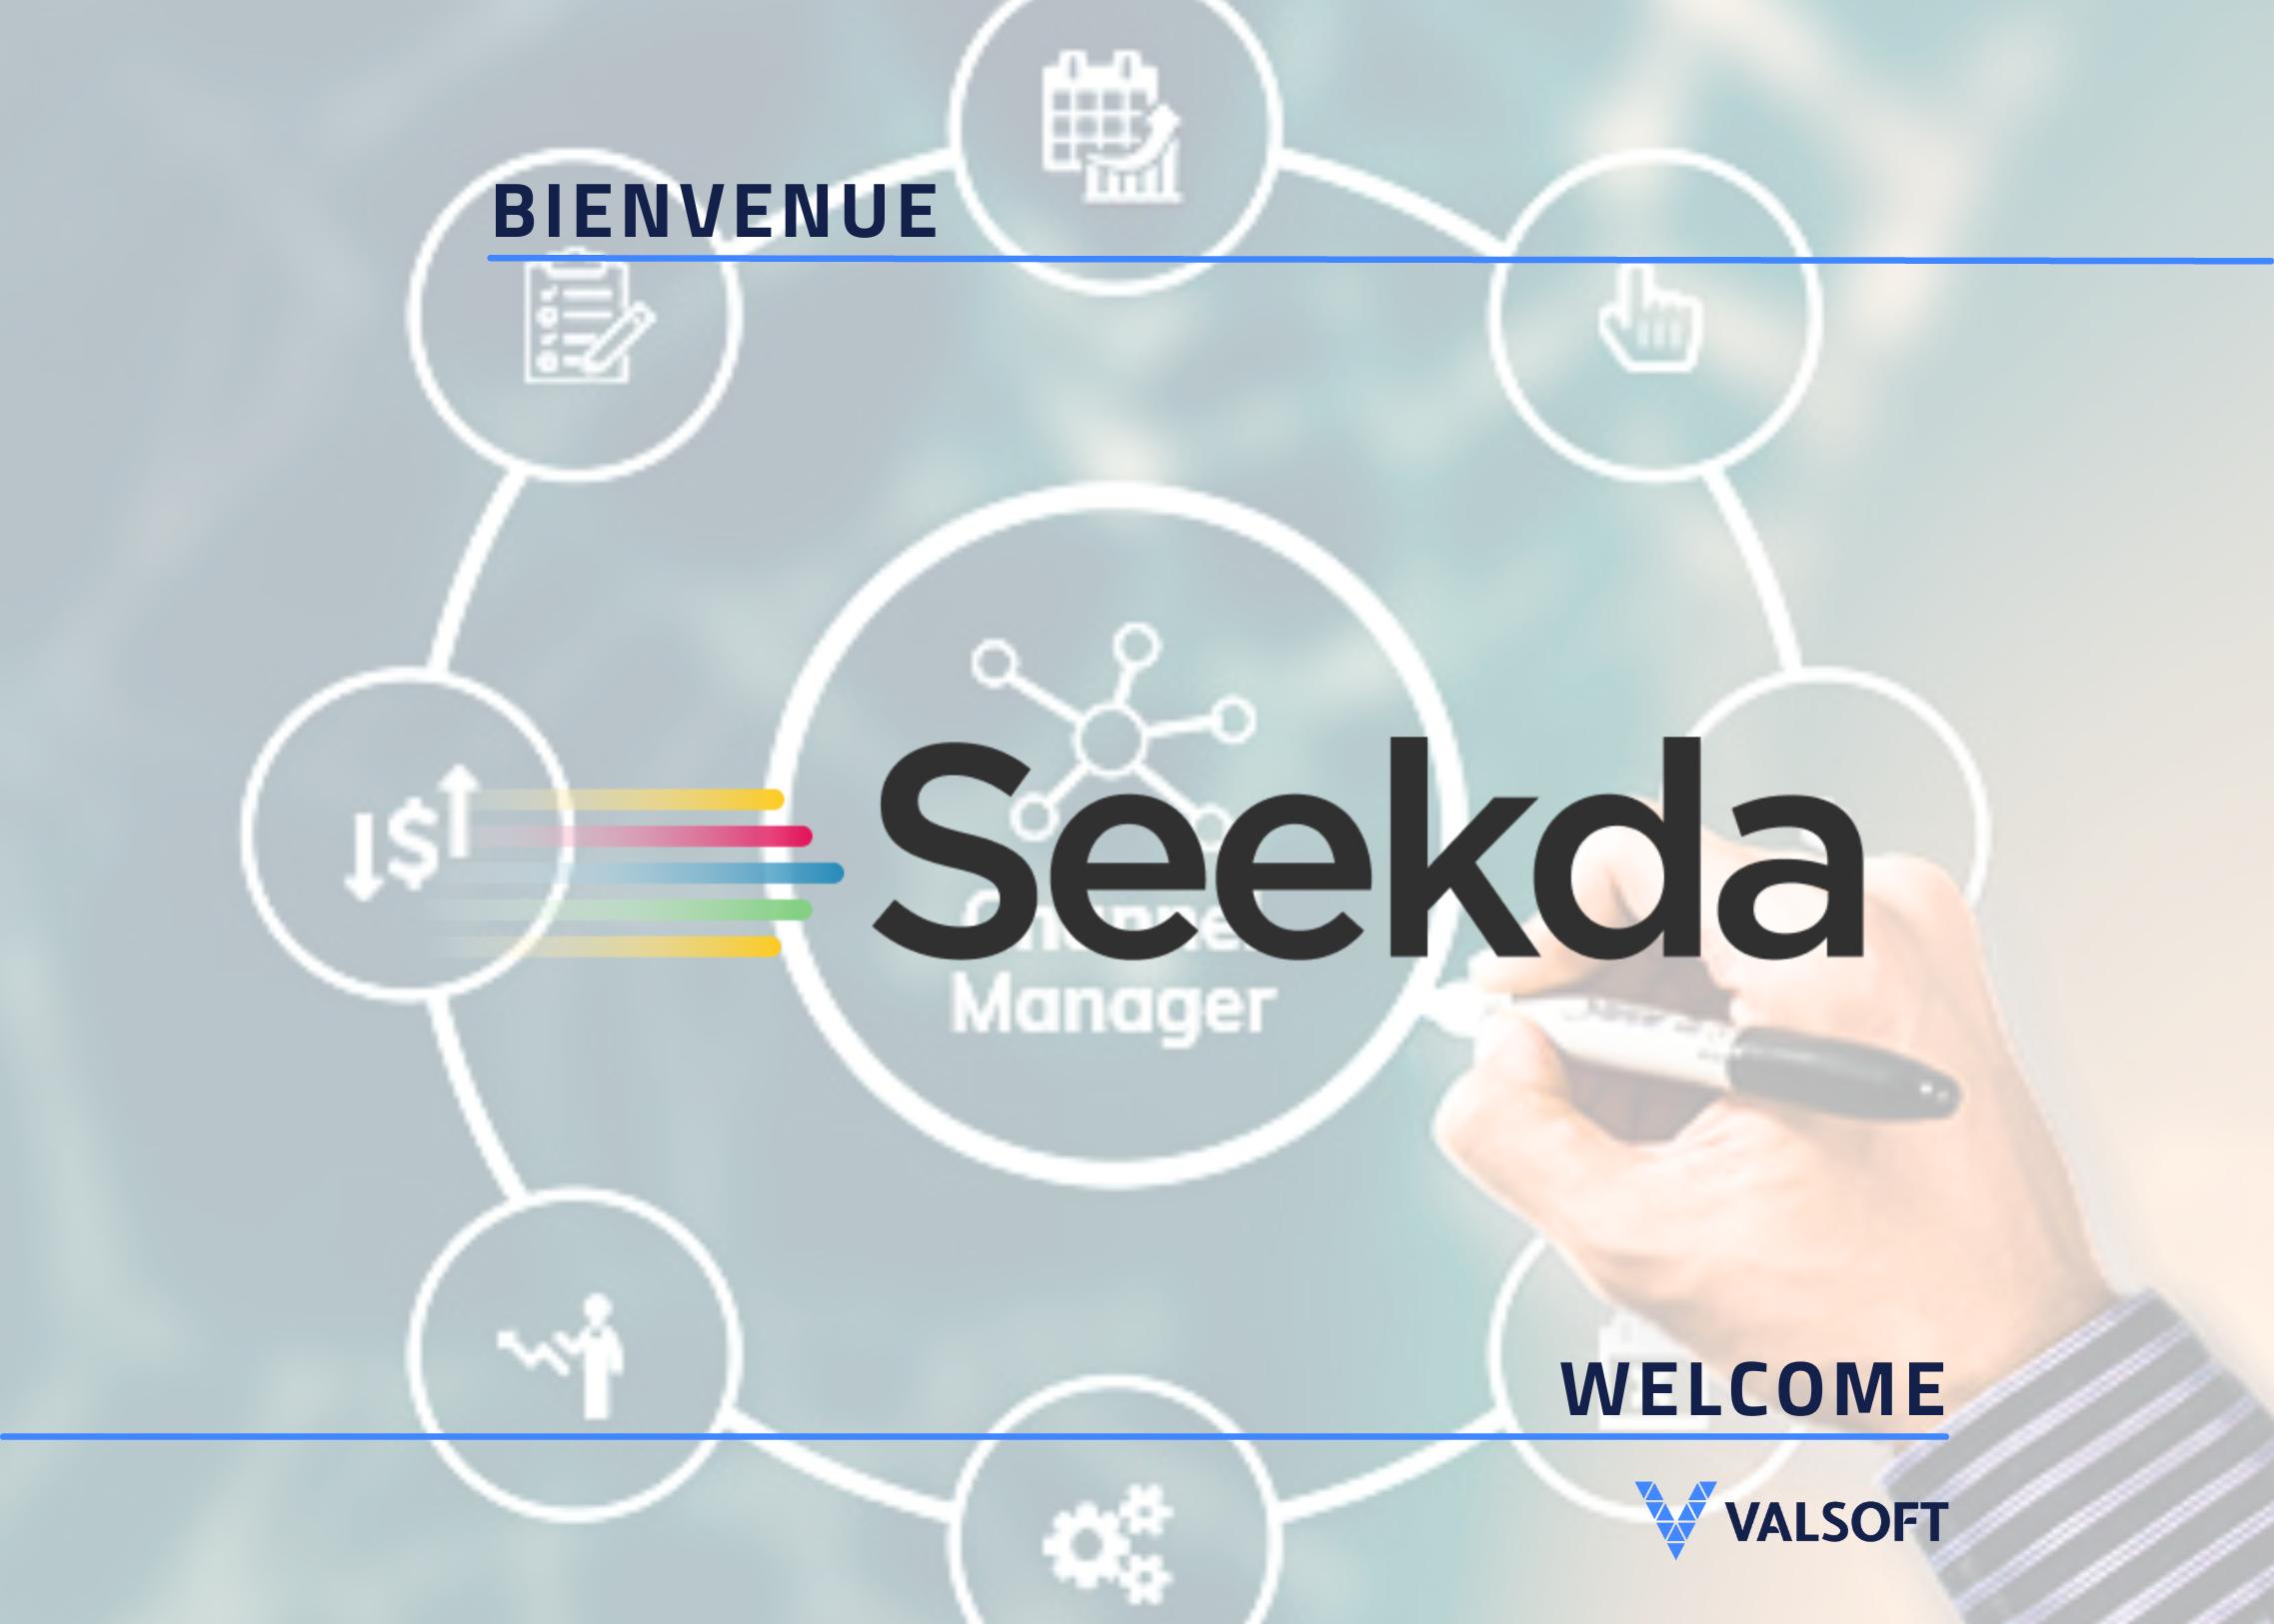 Seekda - Acquisitions